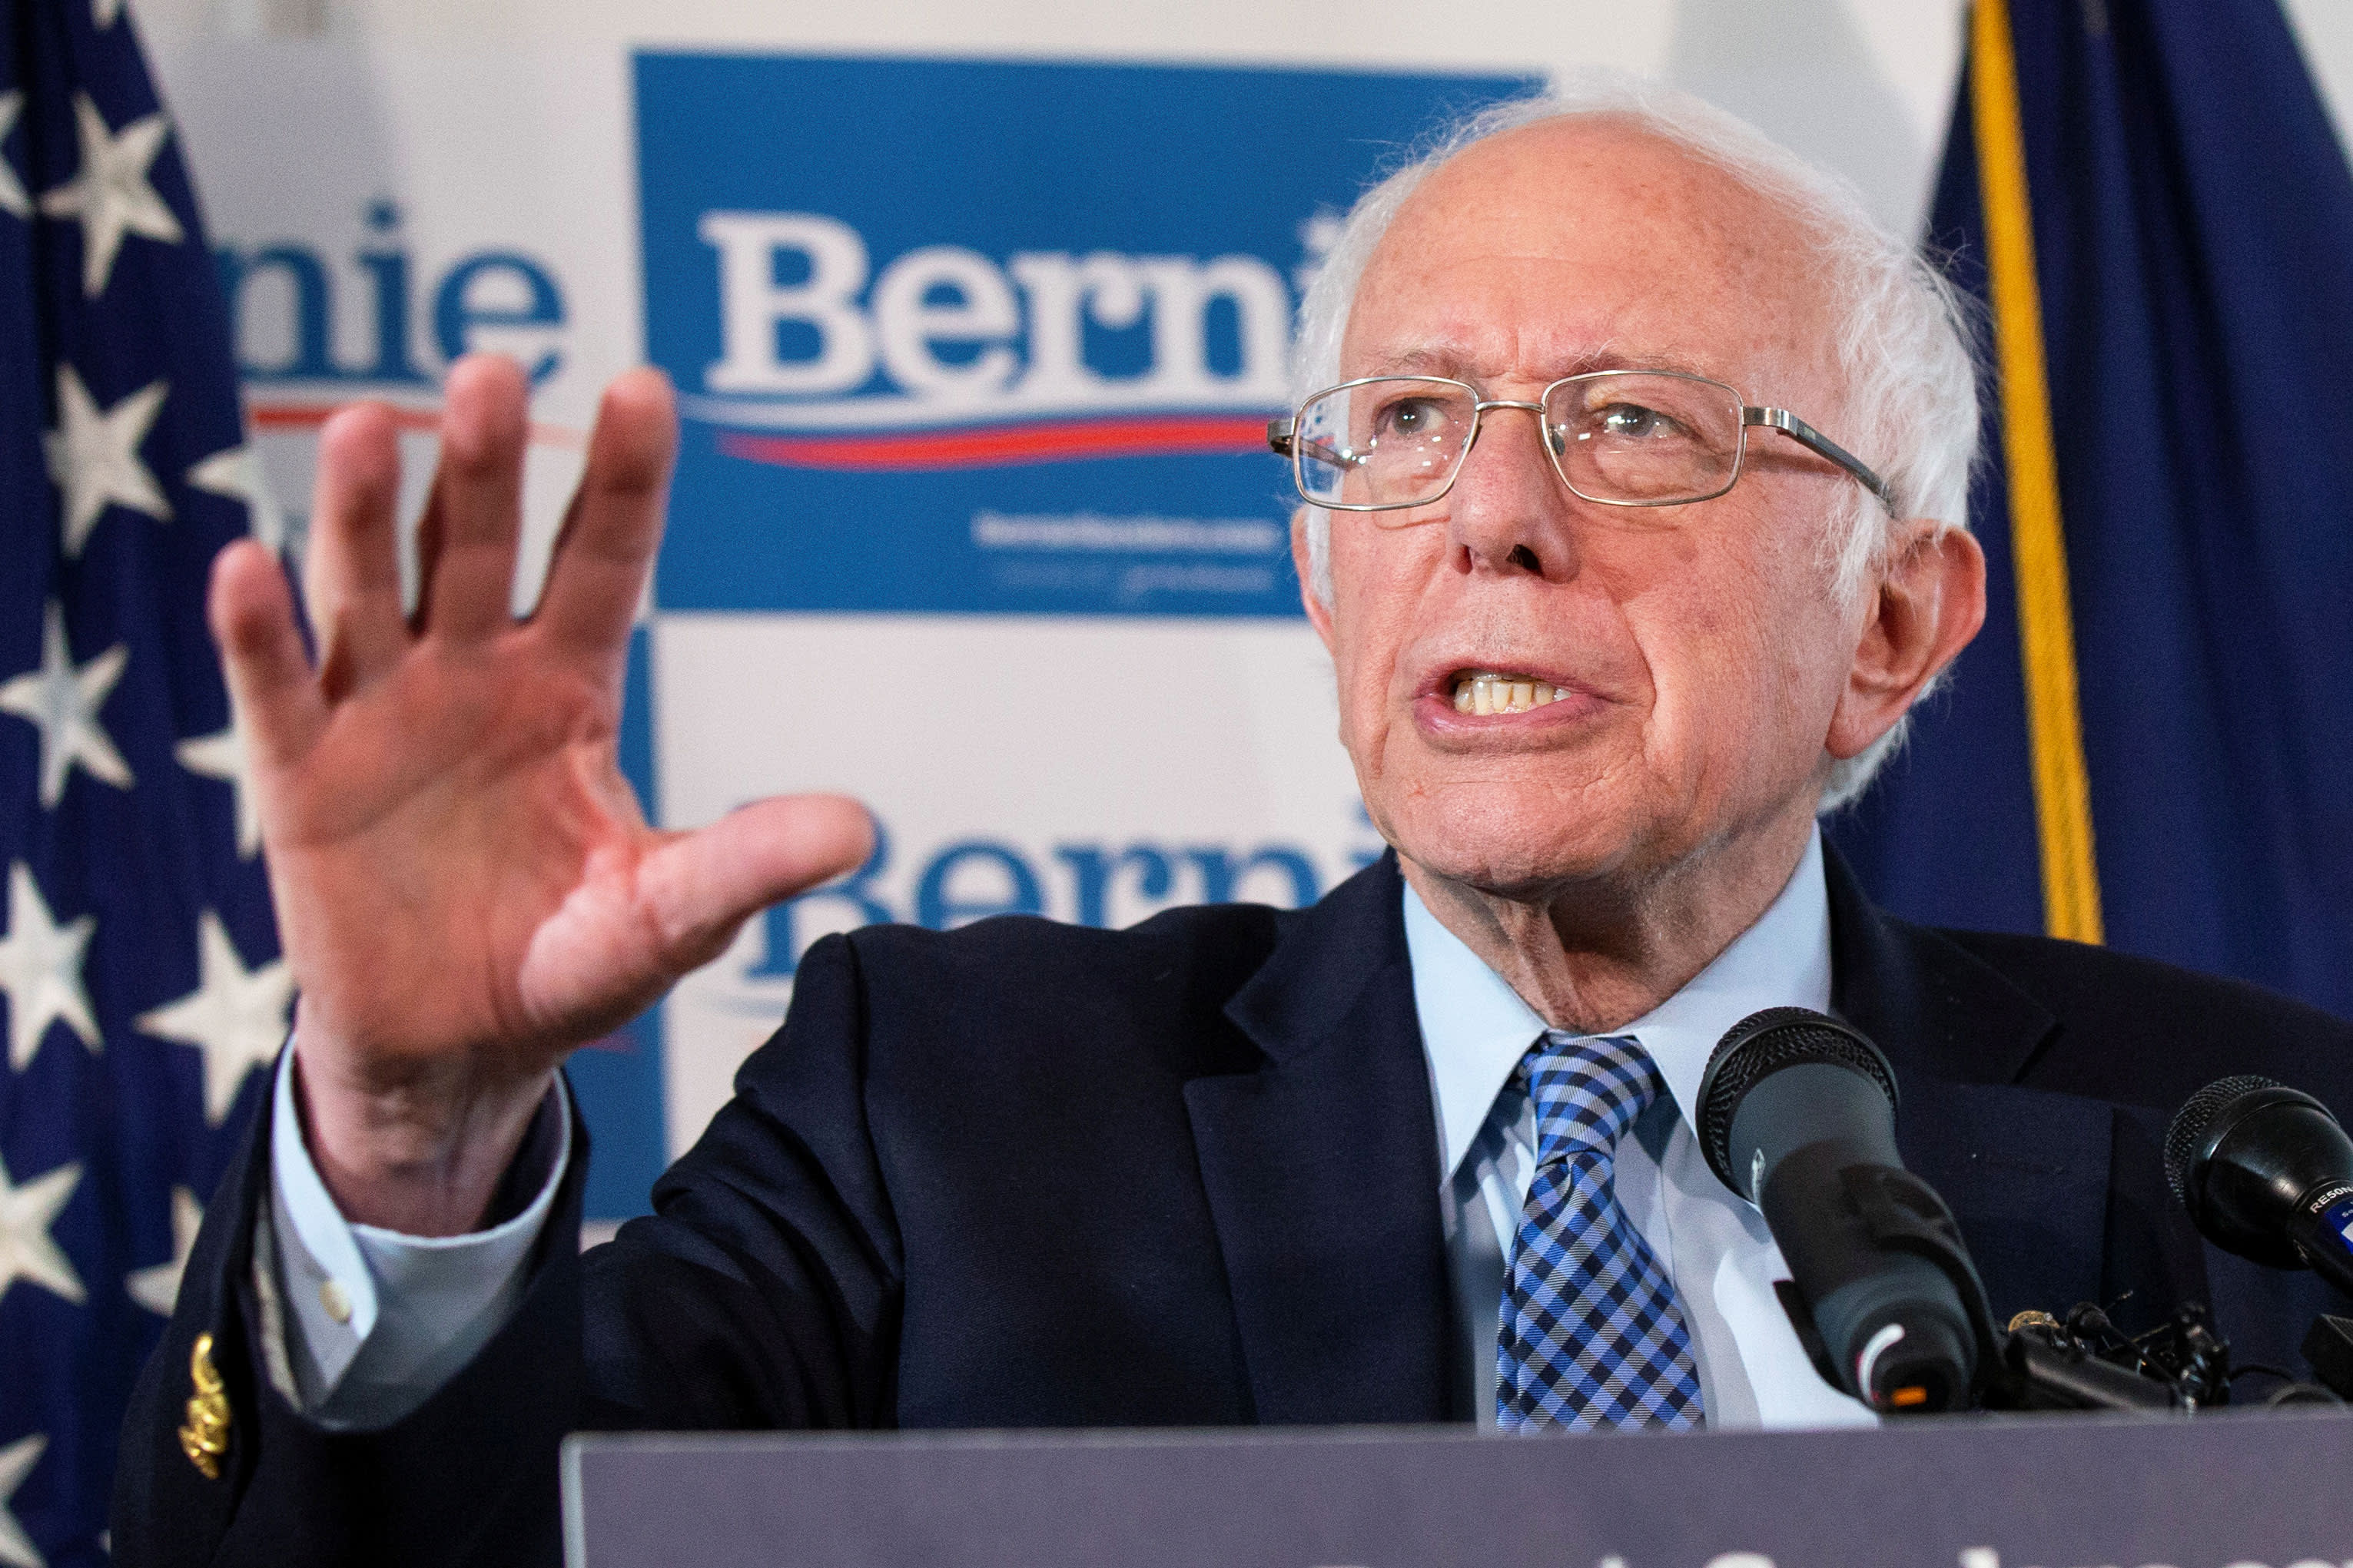 Coronavirus updates: Bernie Sanders calls for $2,000 cash payments